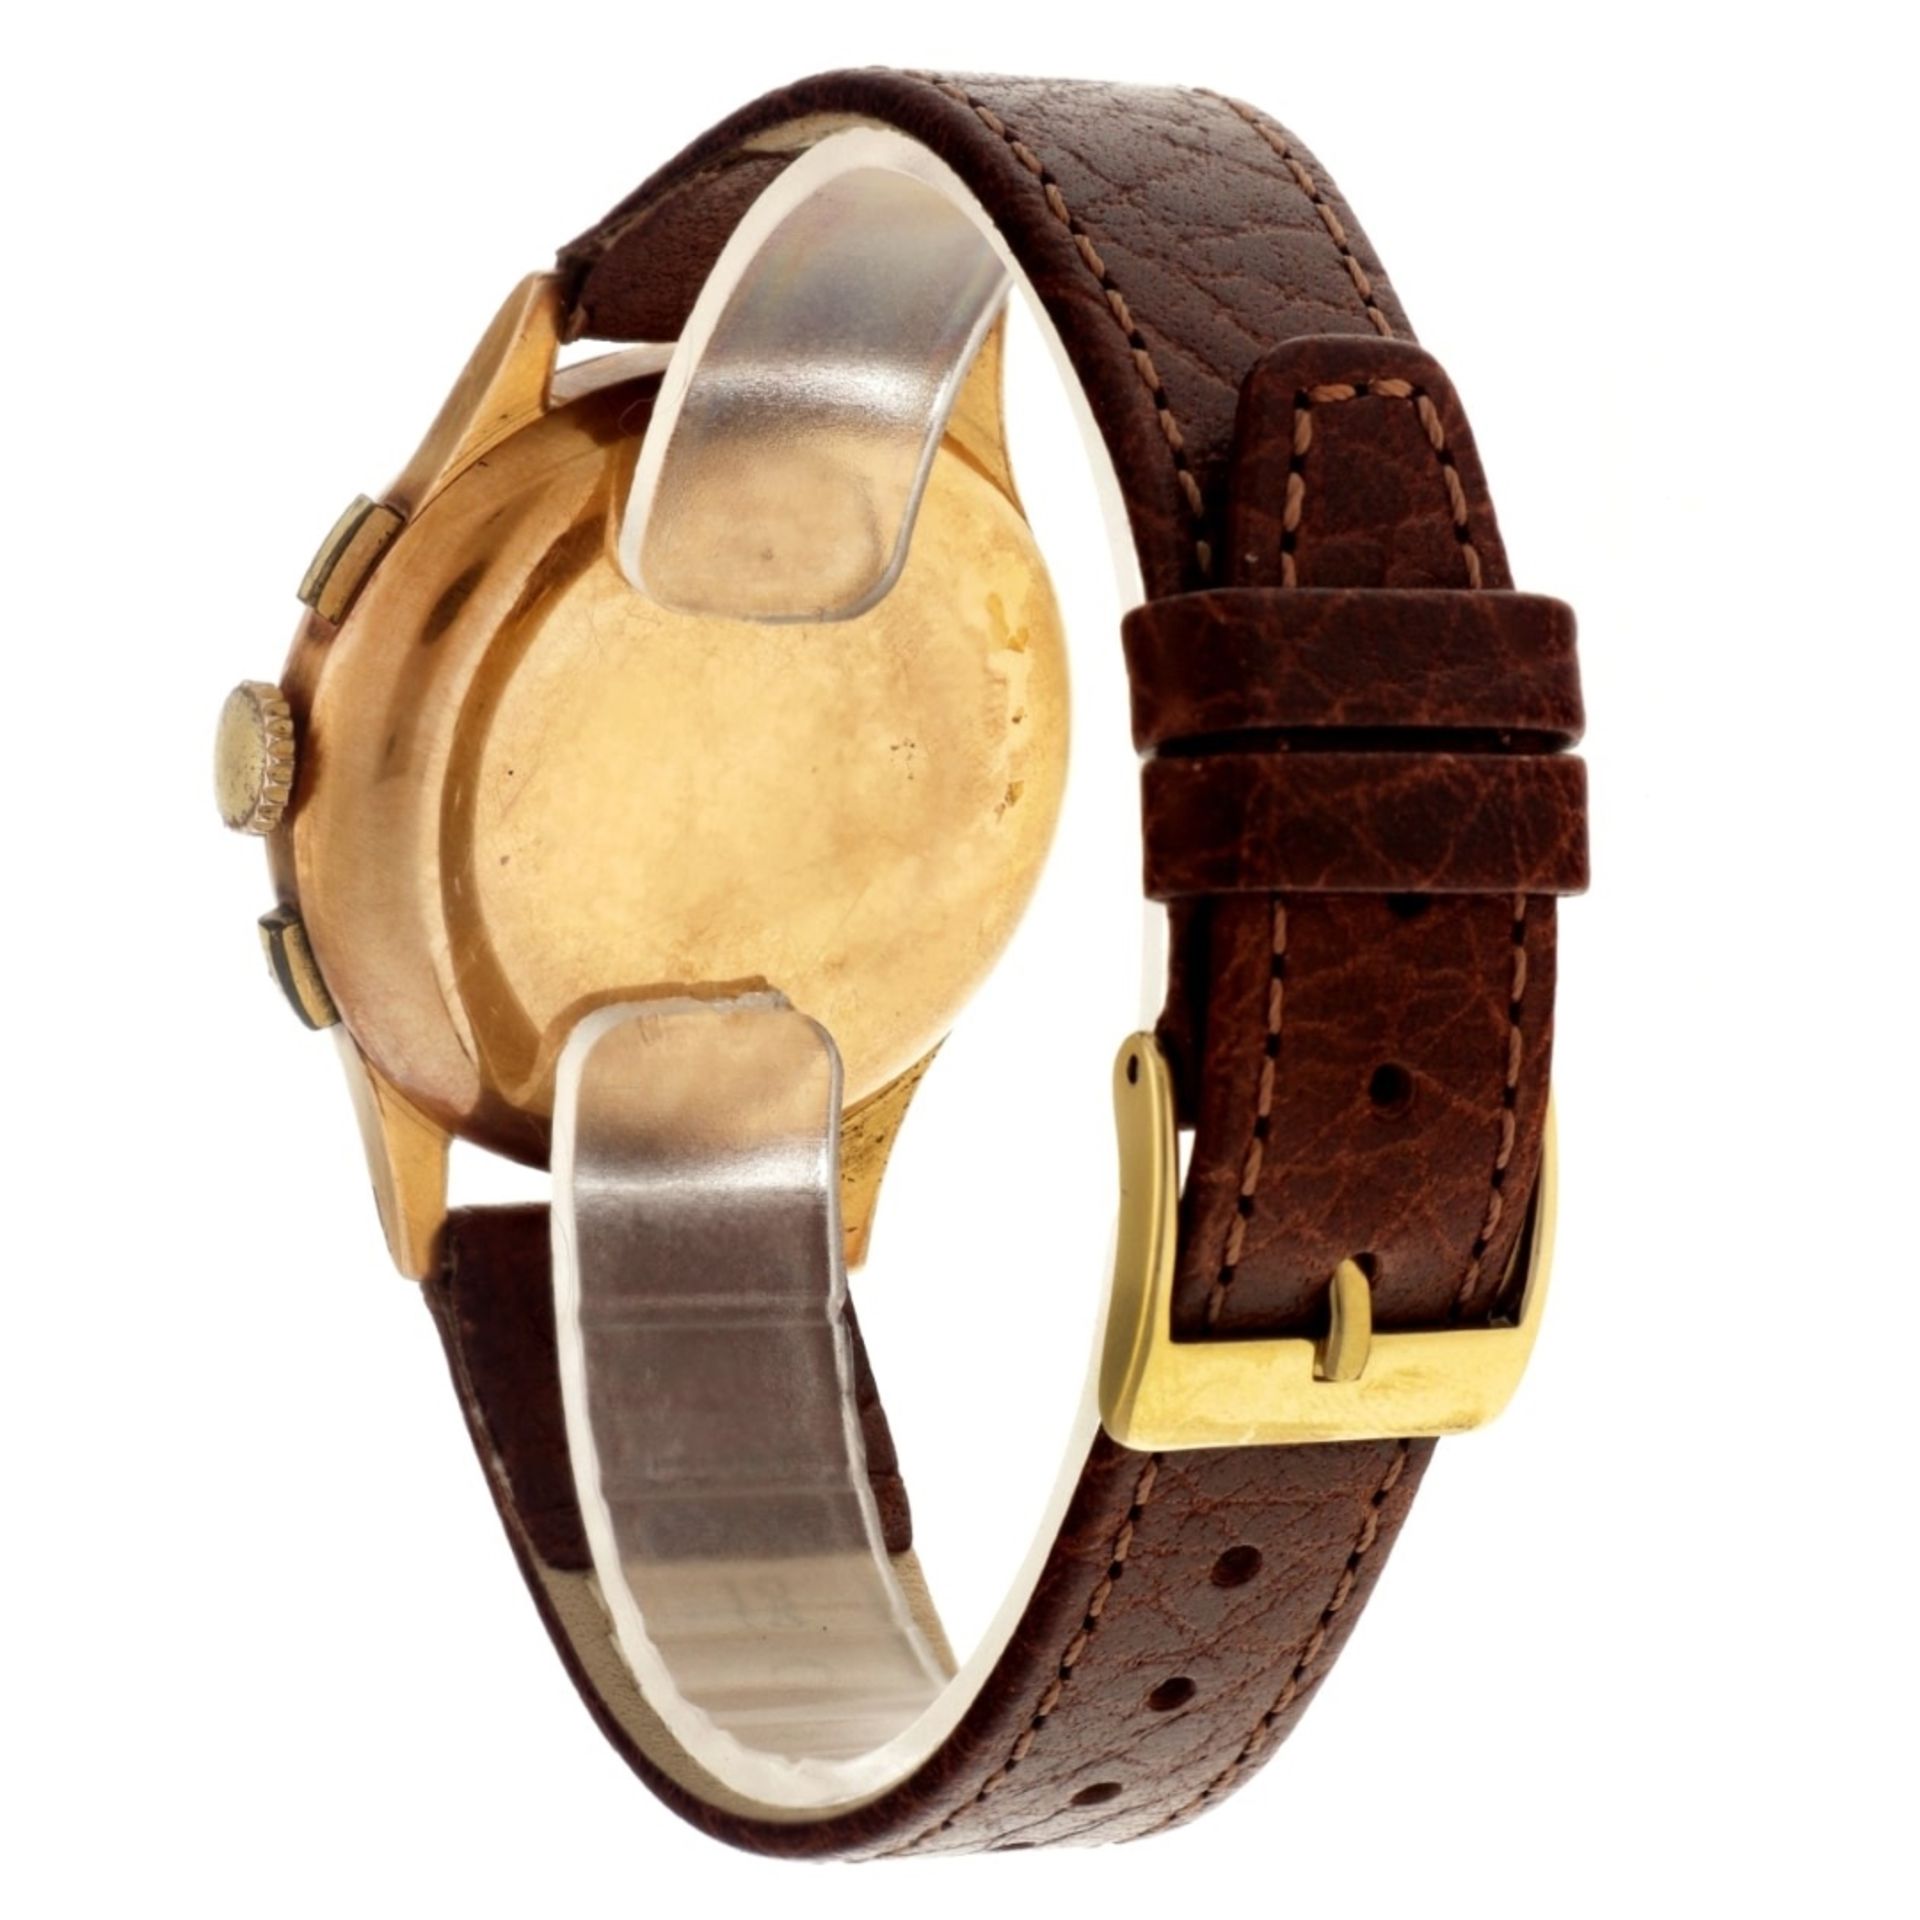 No Reserve - Baume & Mercier vintage 18K. chronograph - Men's watch. - Image 3 of 6